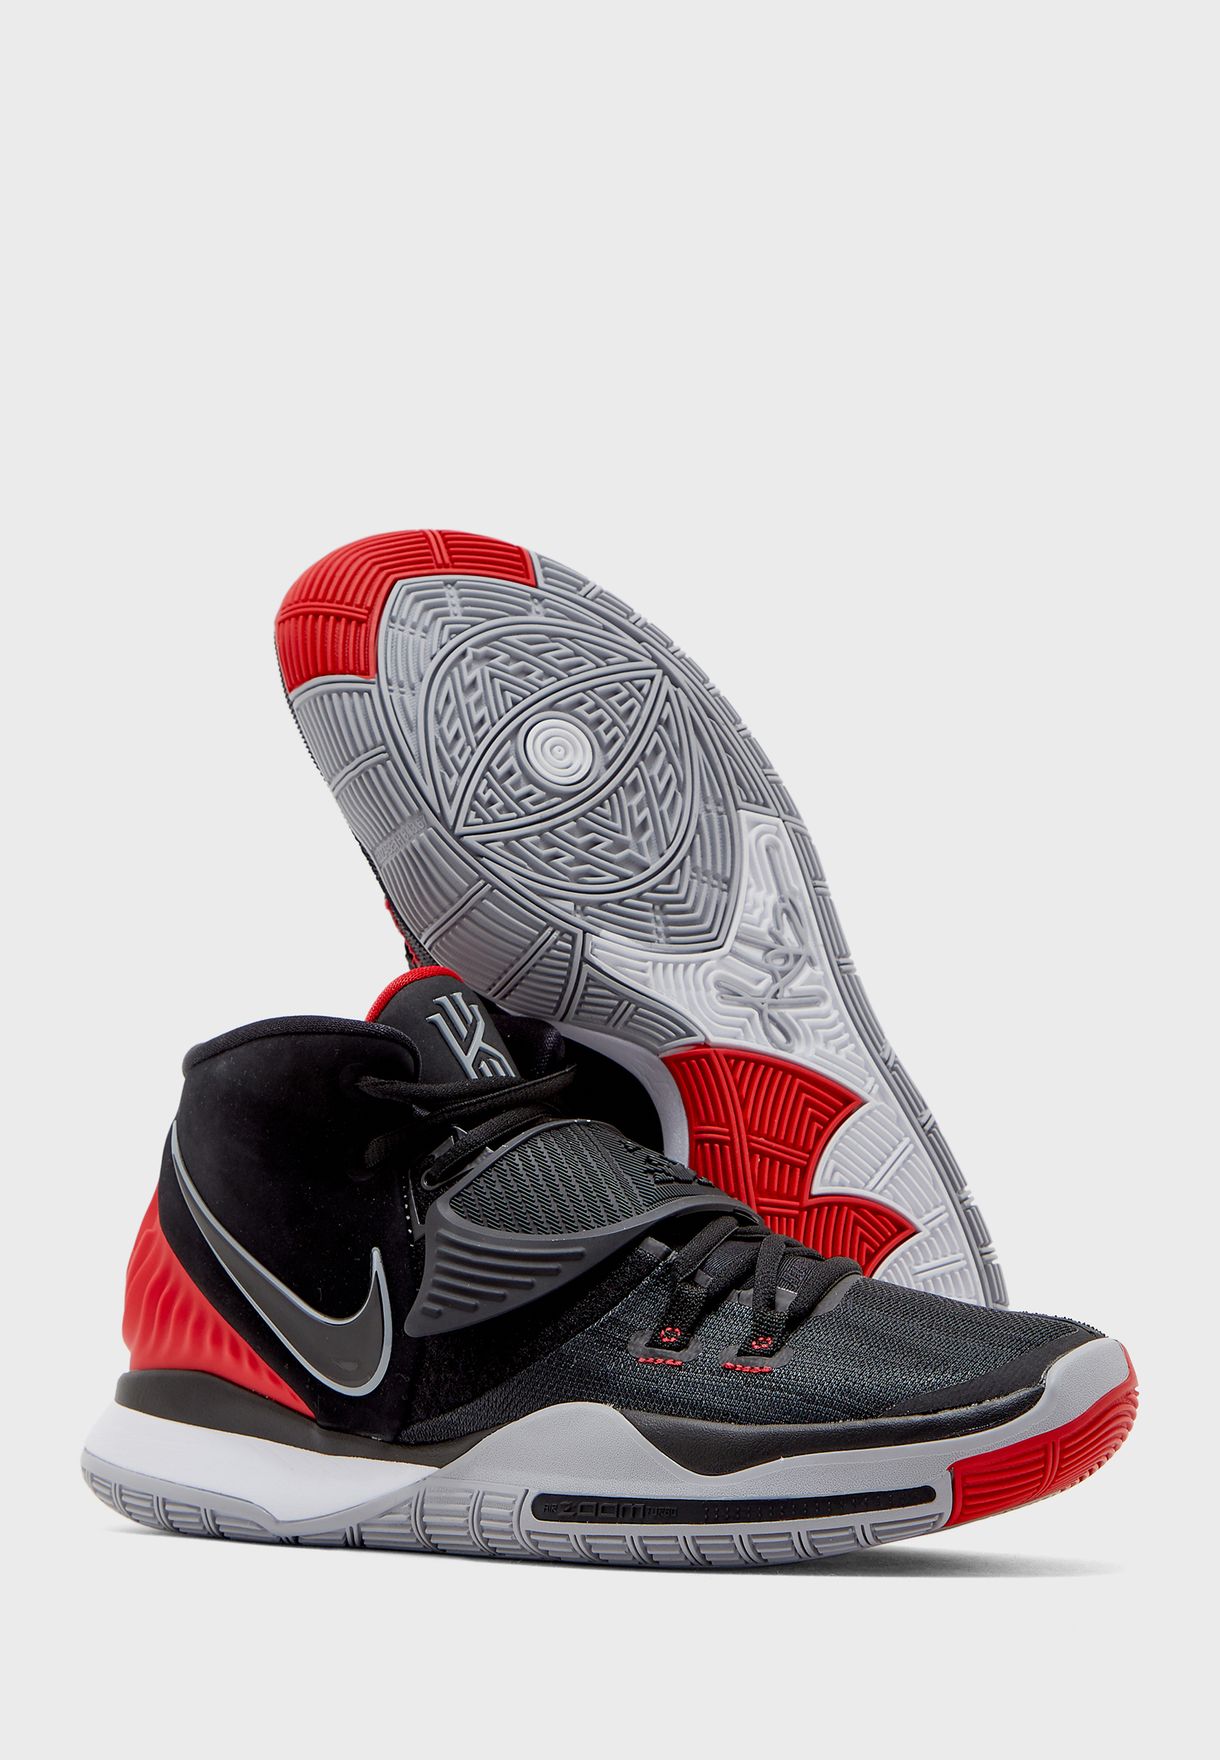 Nike presenta las zapatillas Kyrie 6 NBAManiacs.com